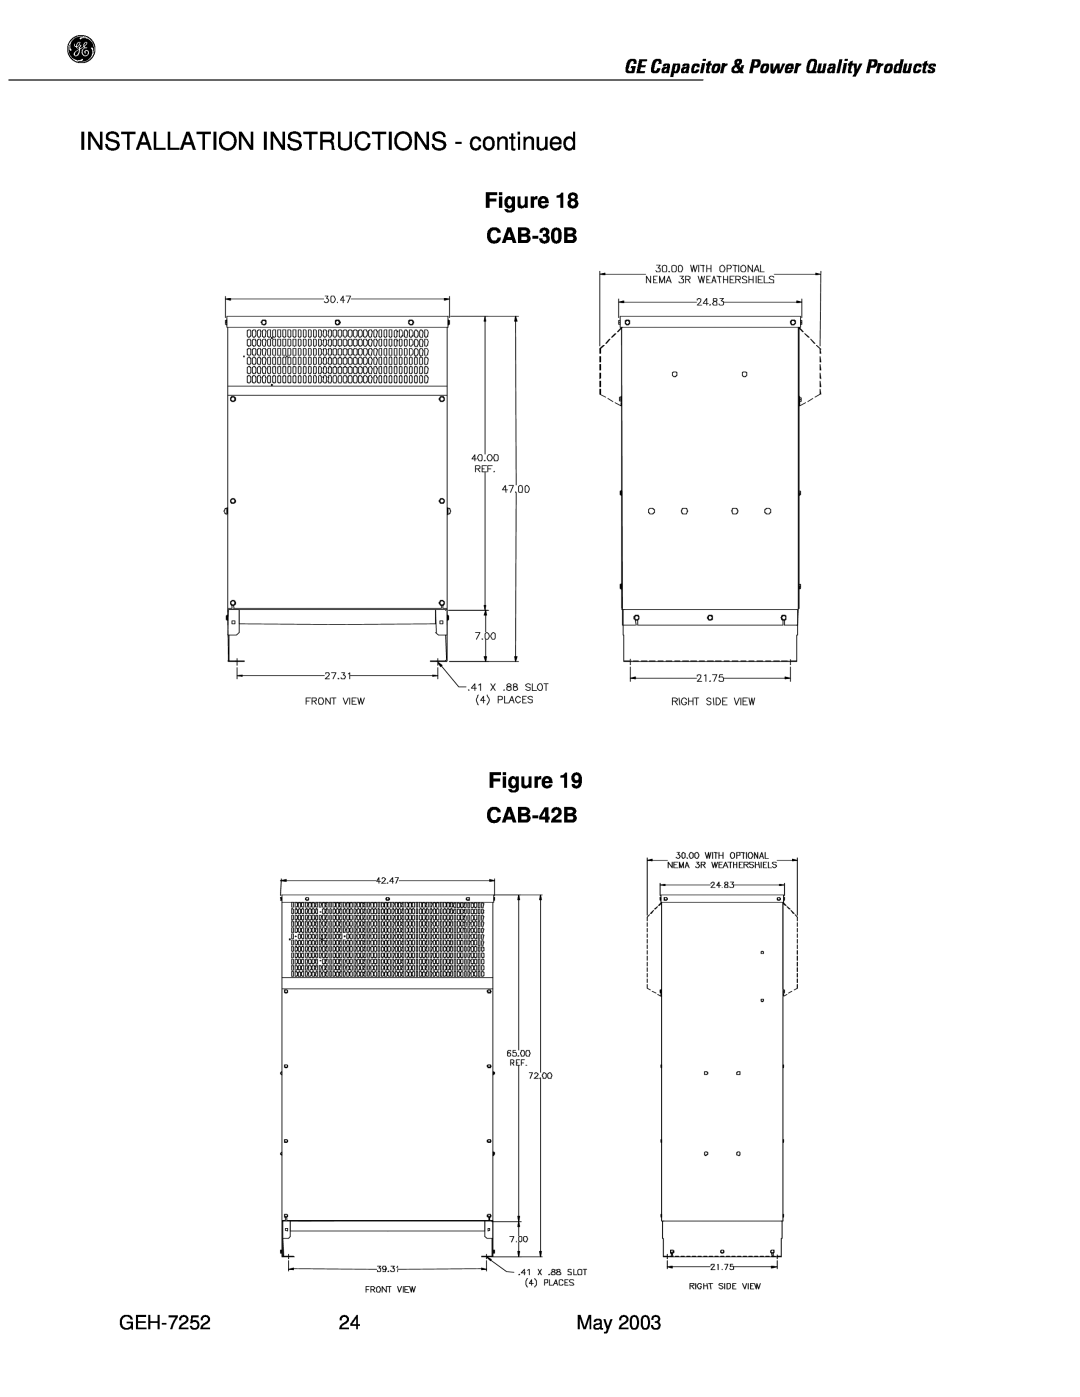 GE SERIES B 480 user manual Figure CAB-30B Figure CAB-42B, INSTALLATION INSTRUCTIONS - continued, GEH-7252 